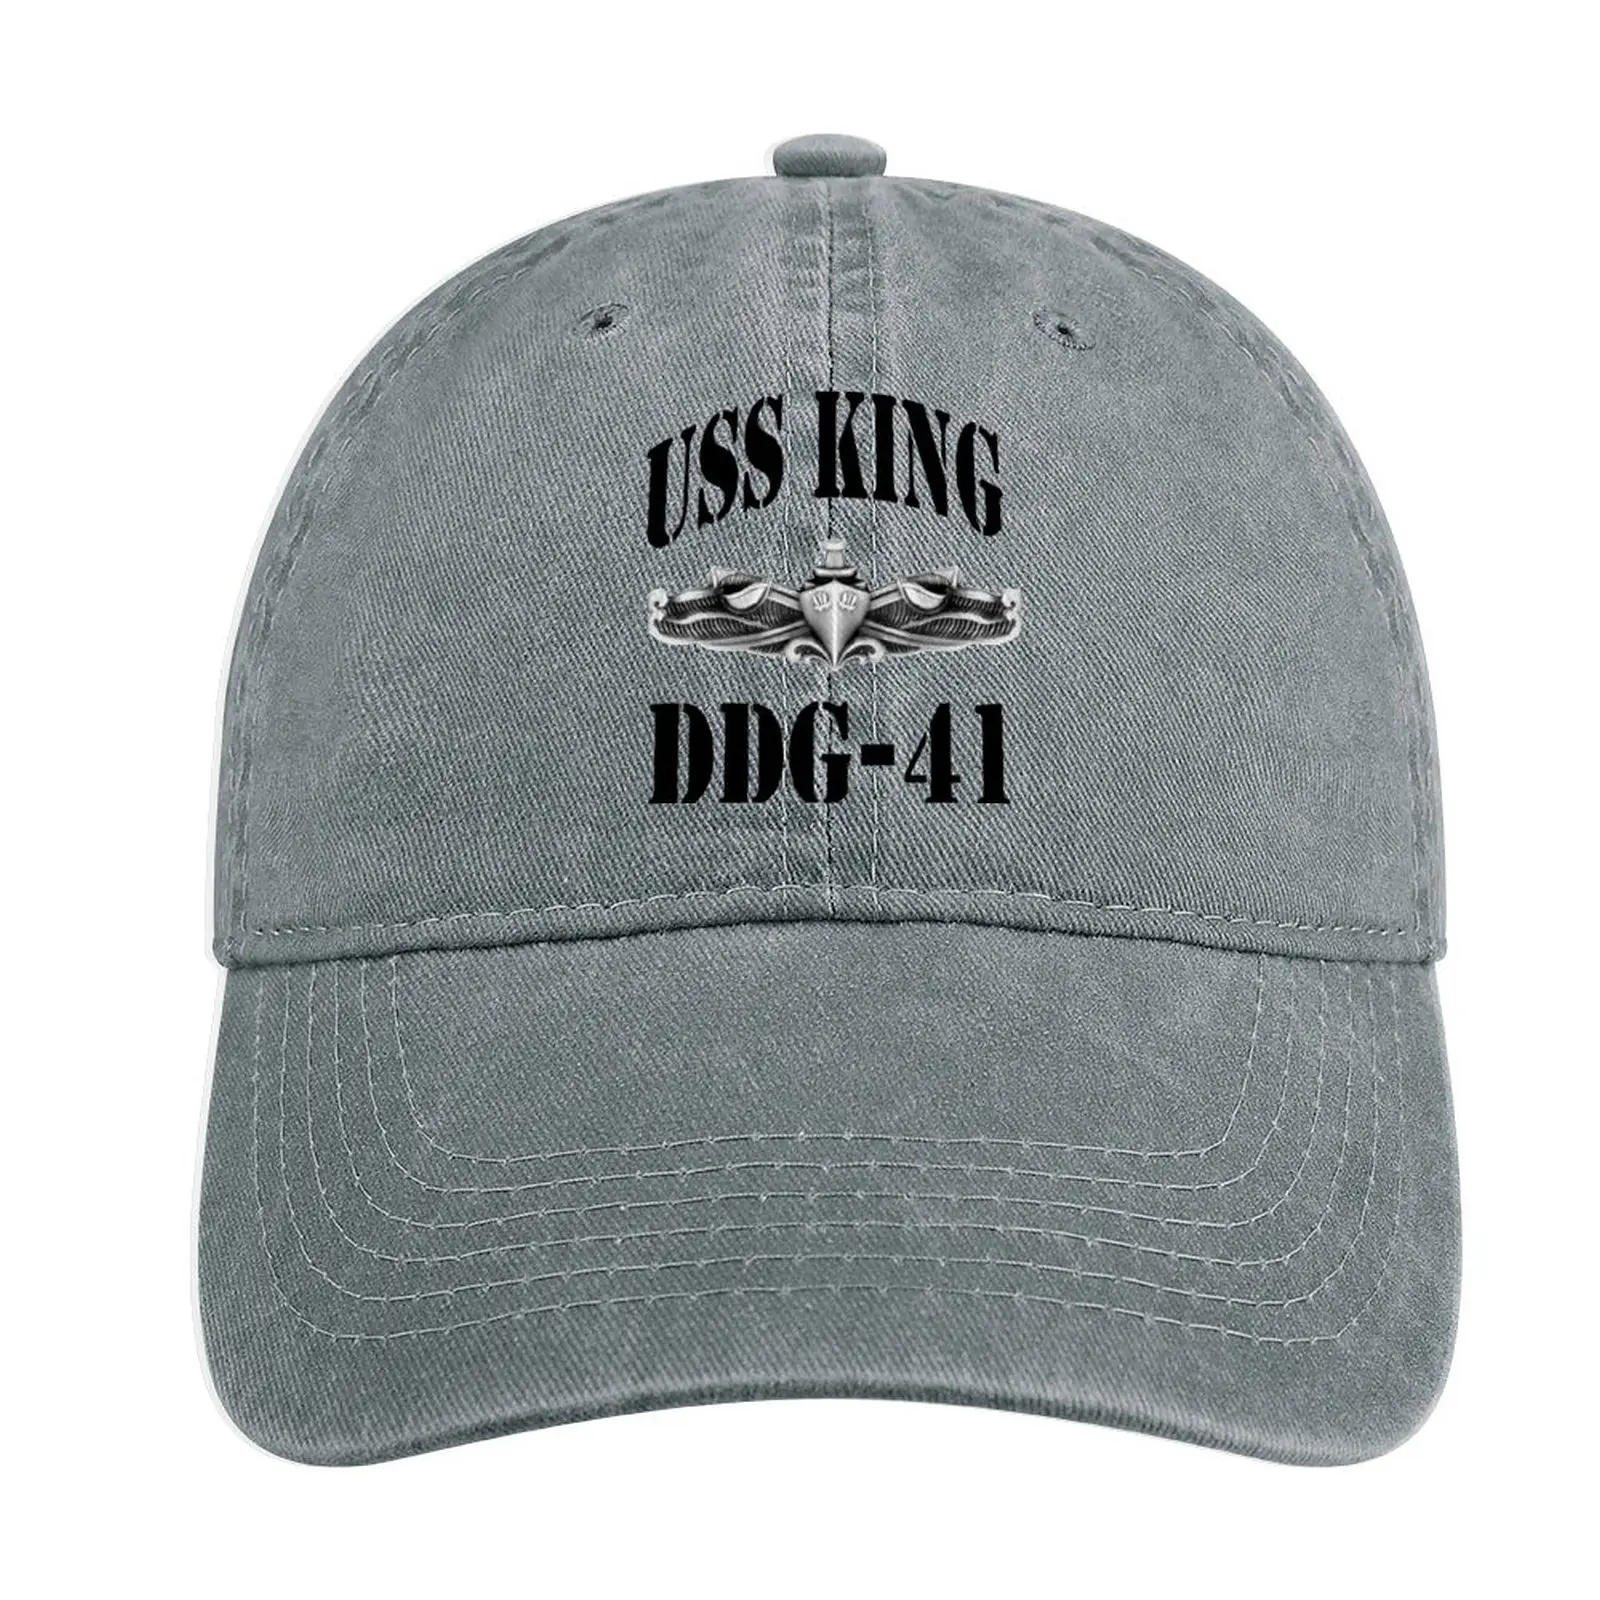 

USS KING (DDG-41) SHIP'S STORE Cowboy Hat fashion Visor Men'S Caps Women'S